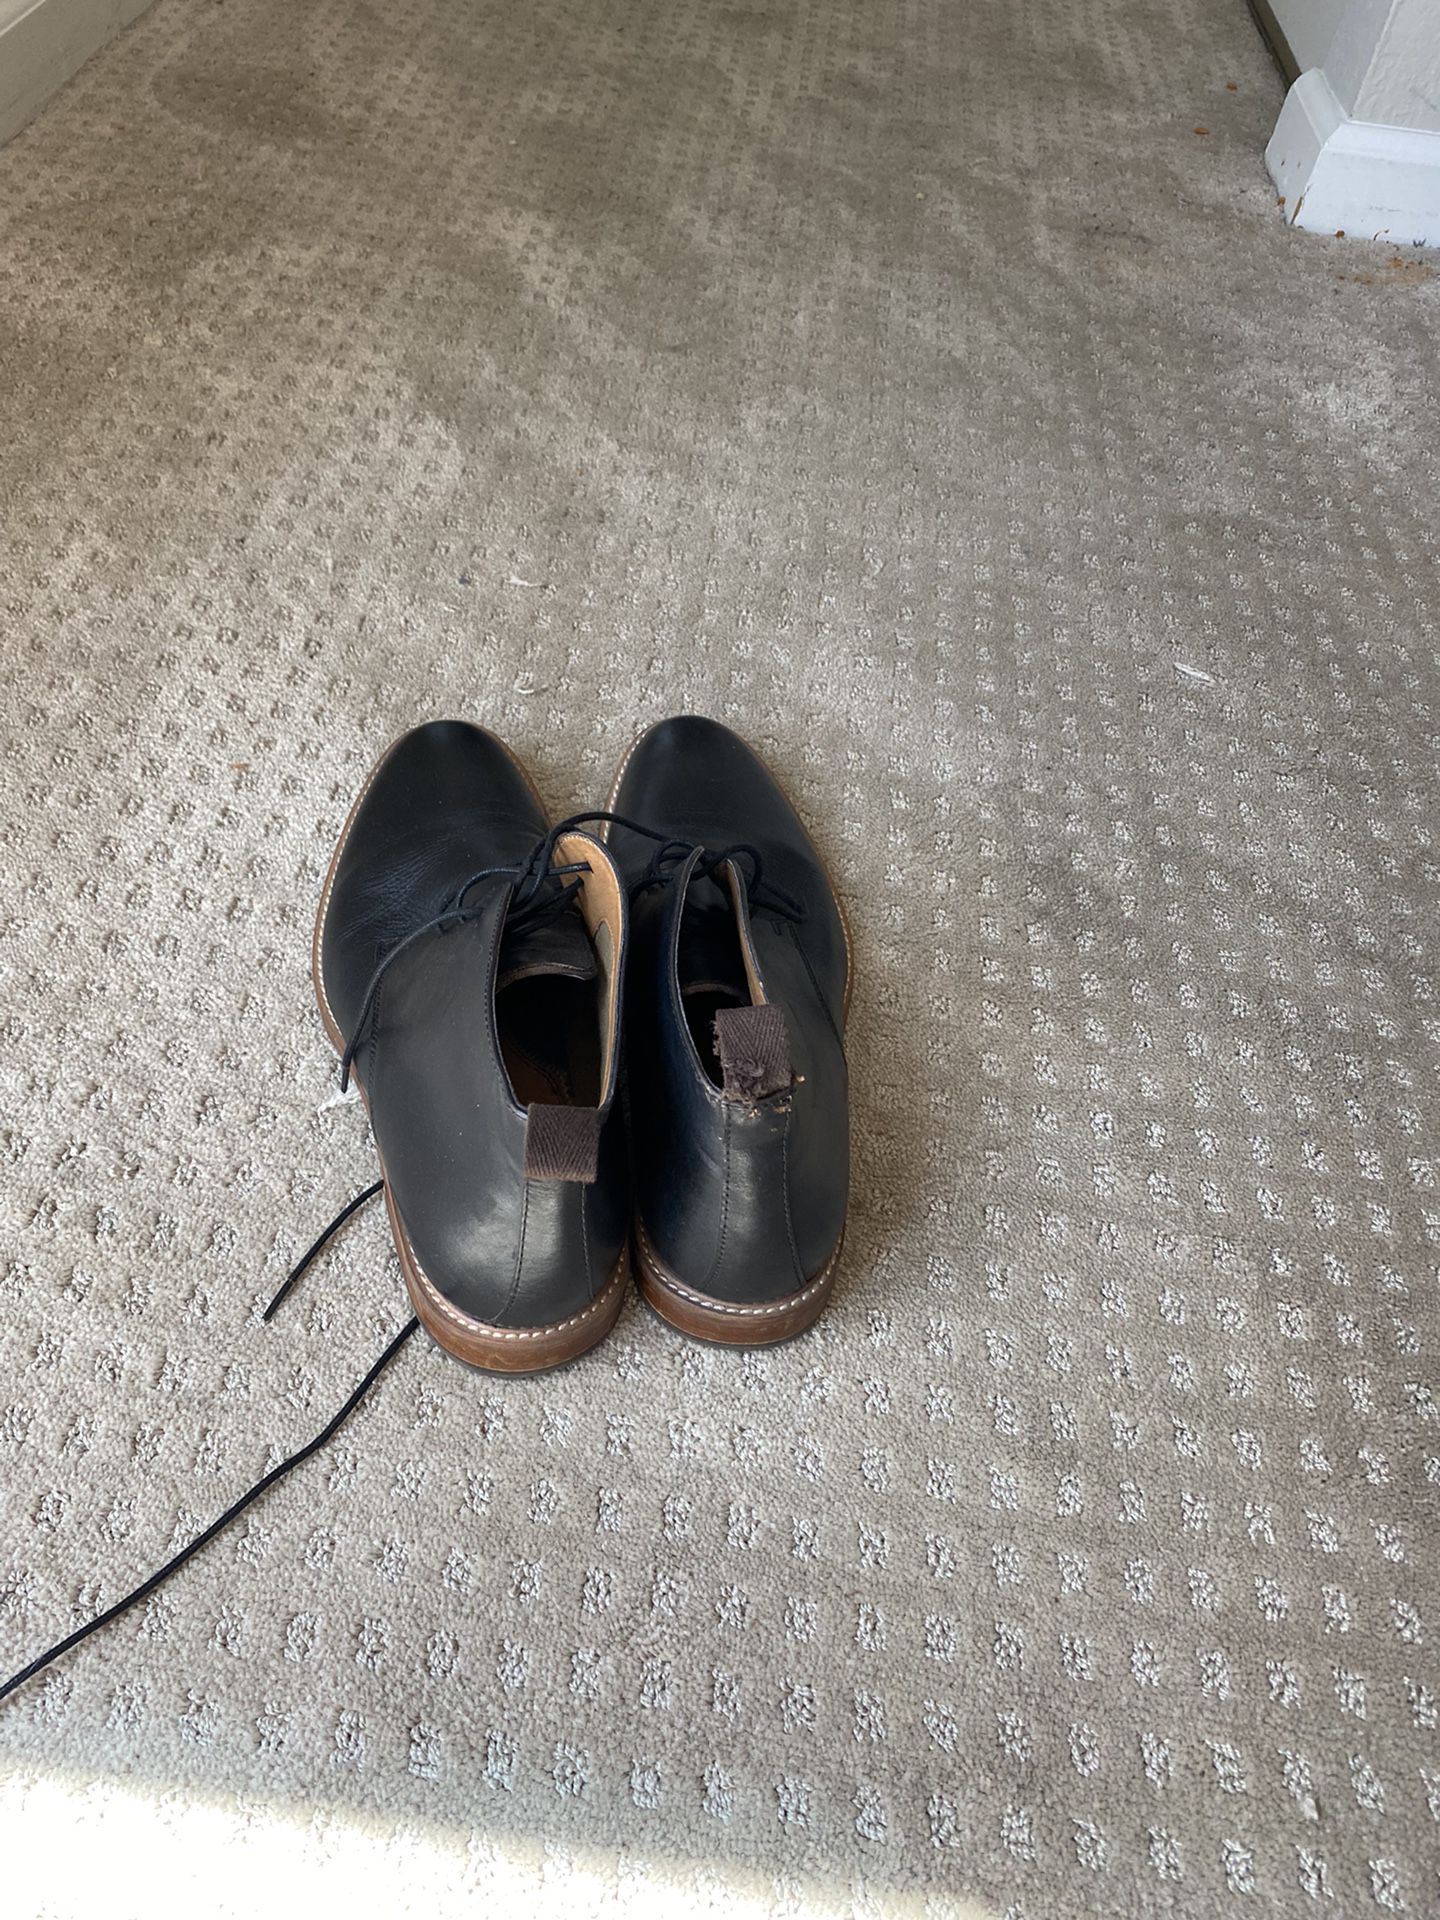 Size 10.5 Men’s Aldo Boots- Never Worn!